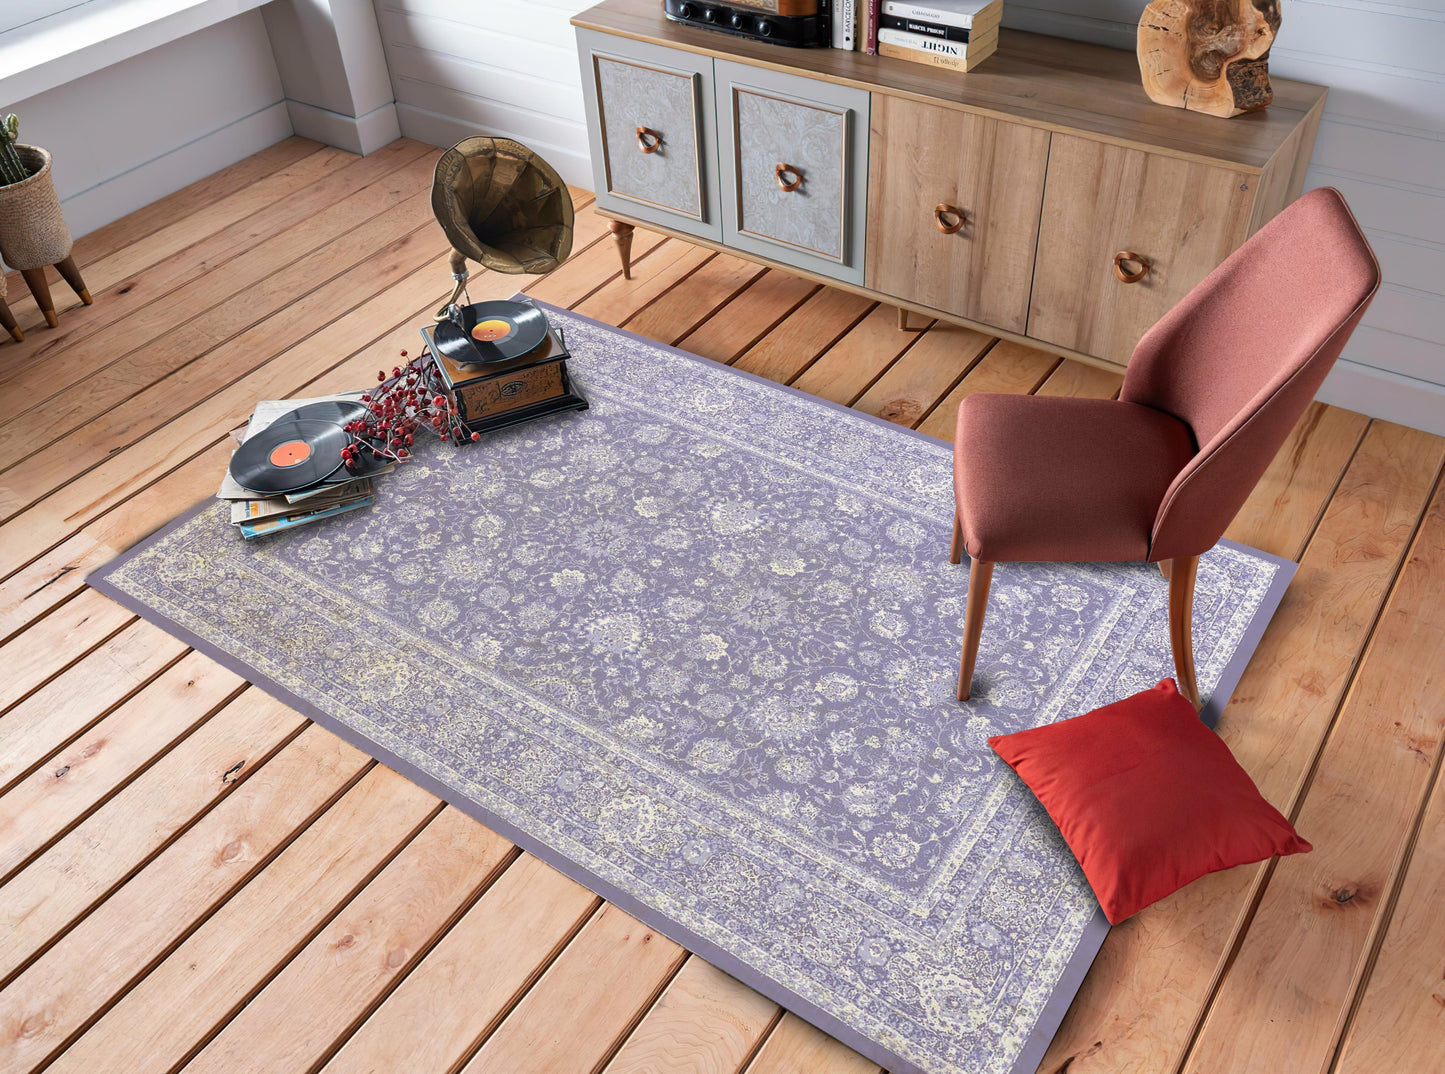 Classical Art Rug, Bedroom Carpet, Vintage Turkish Motif Mat, Cool Office Decor